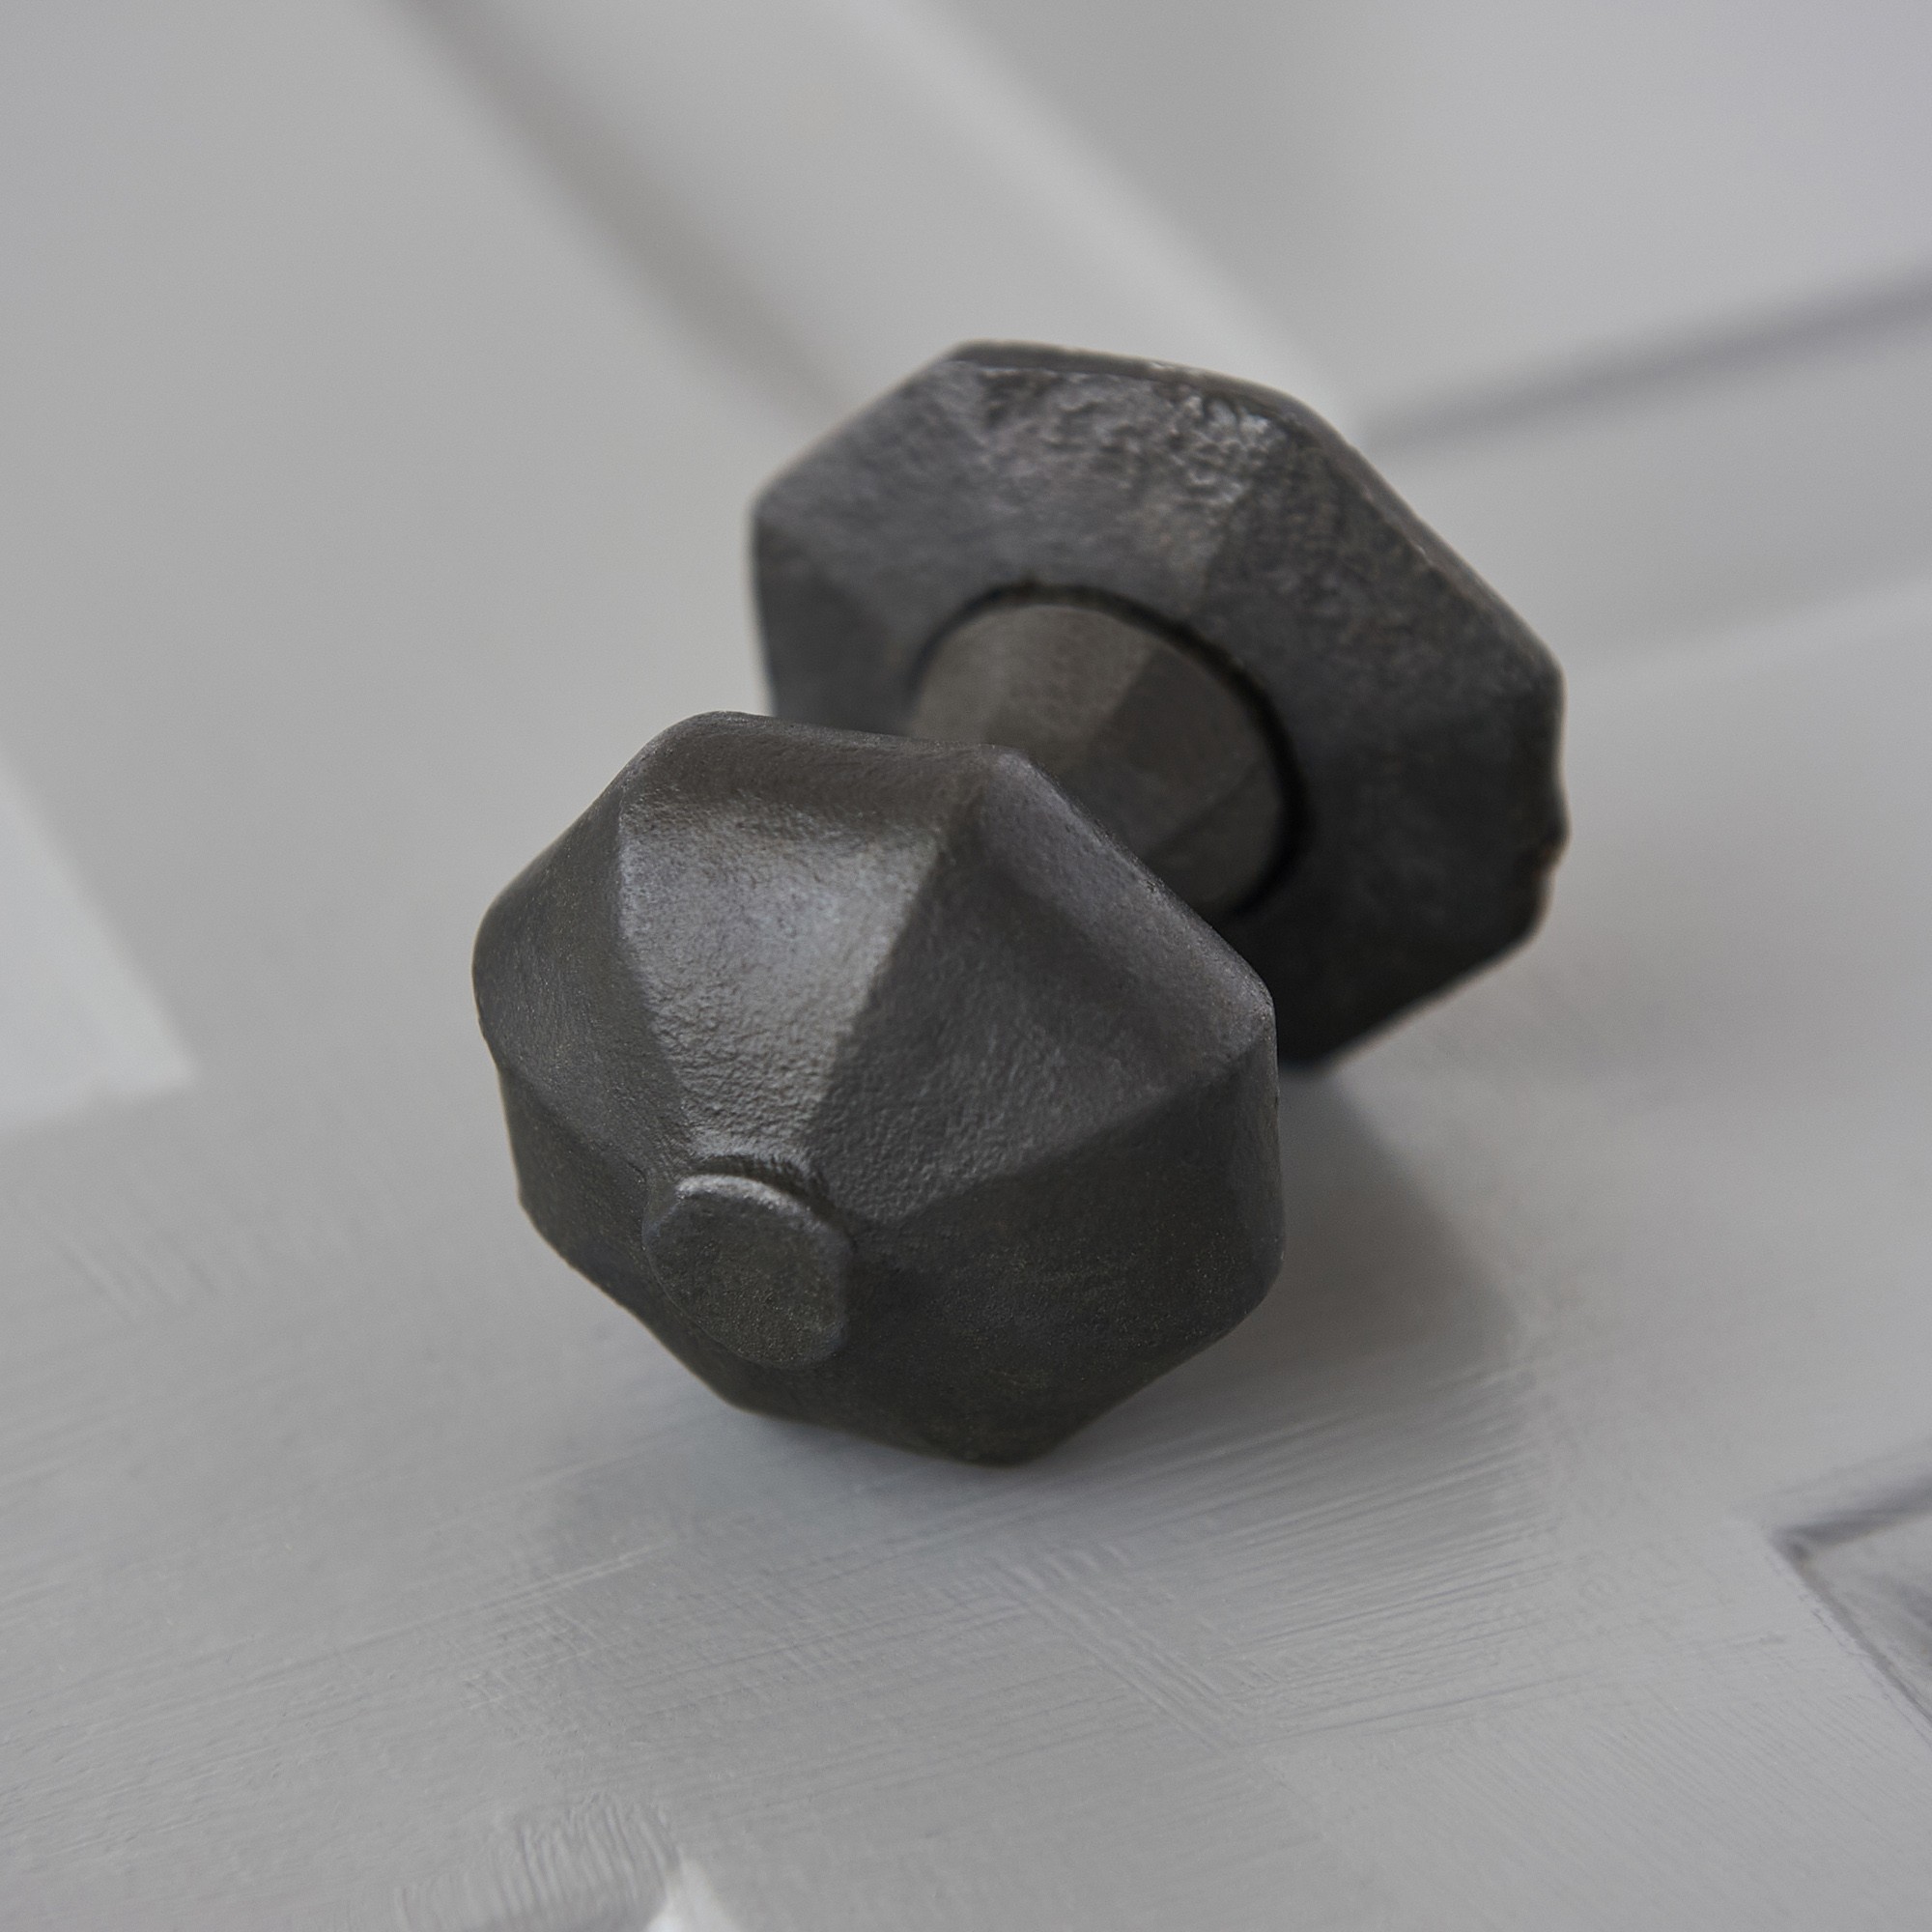 octagonal-forged-door-knobs-pair-black-waxed3